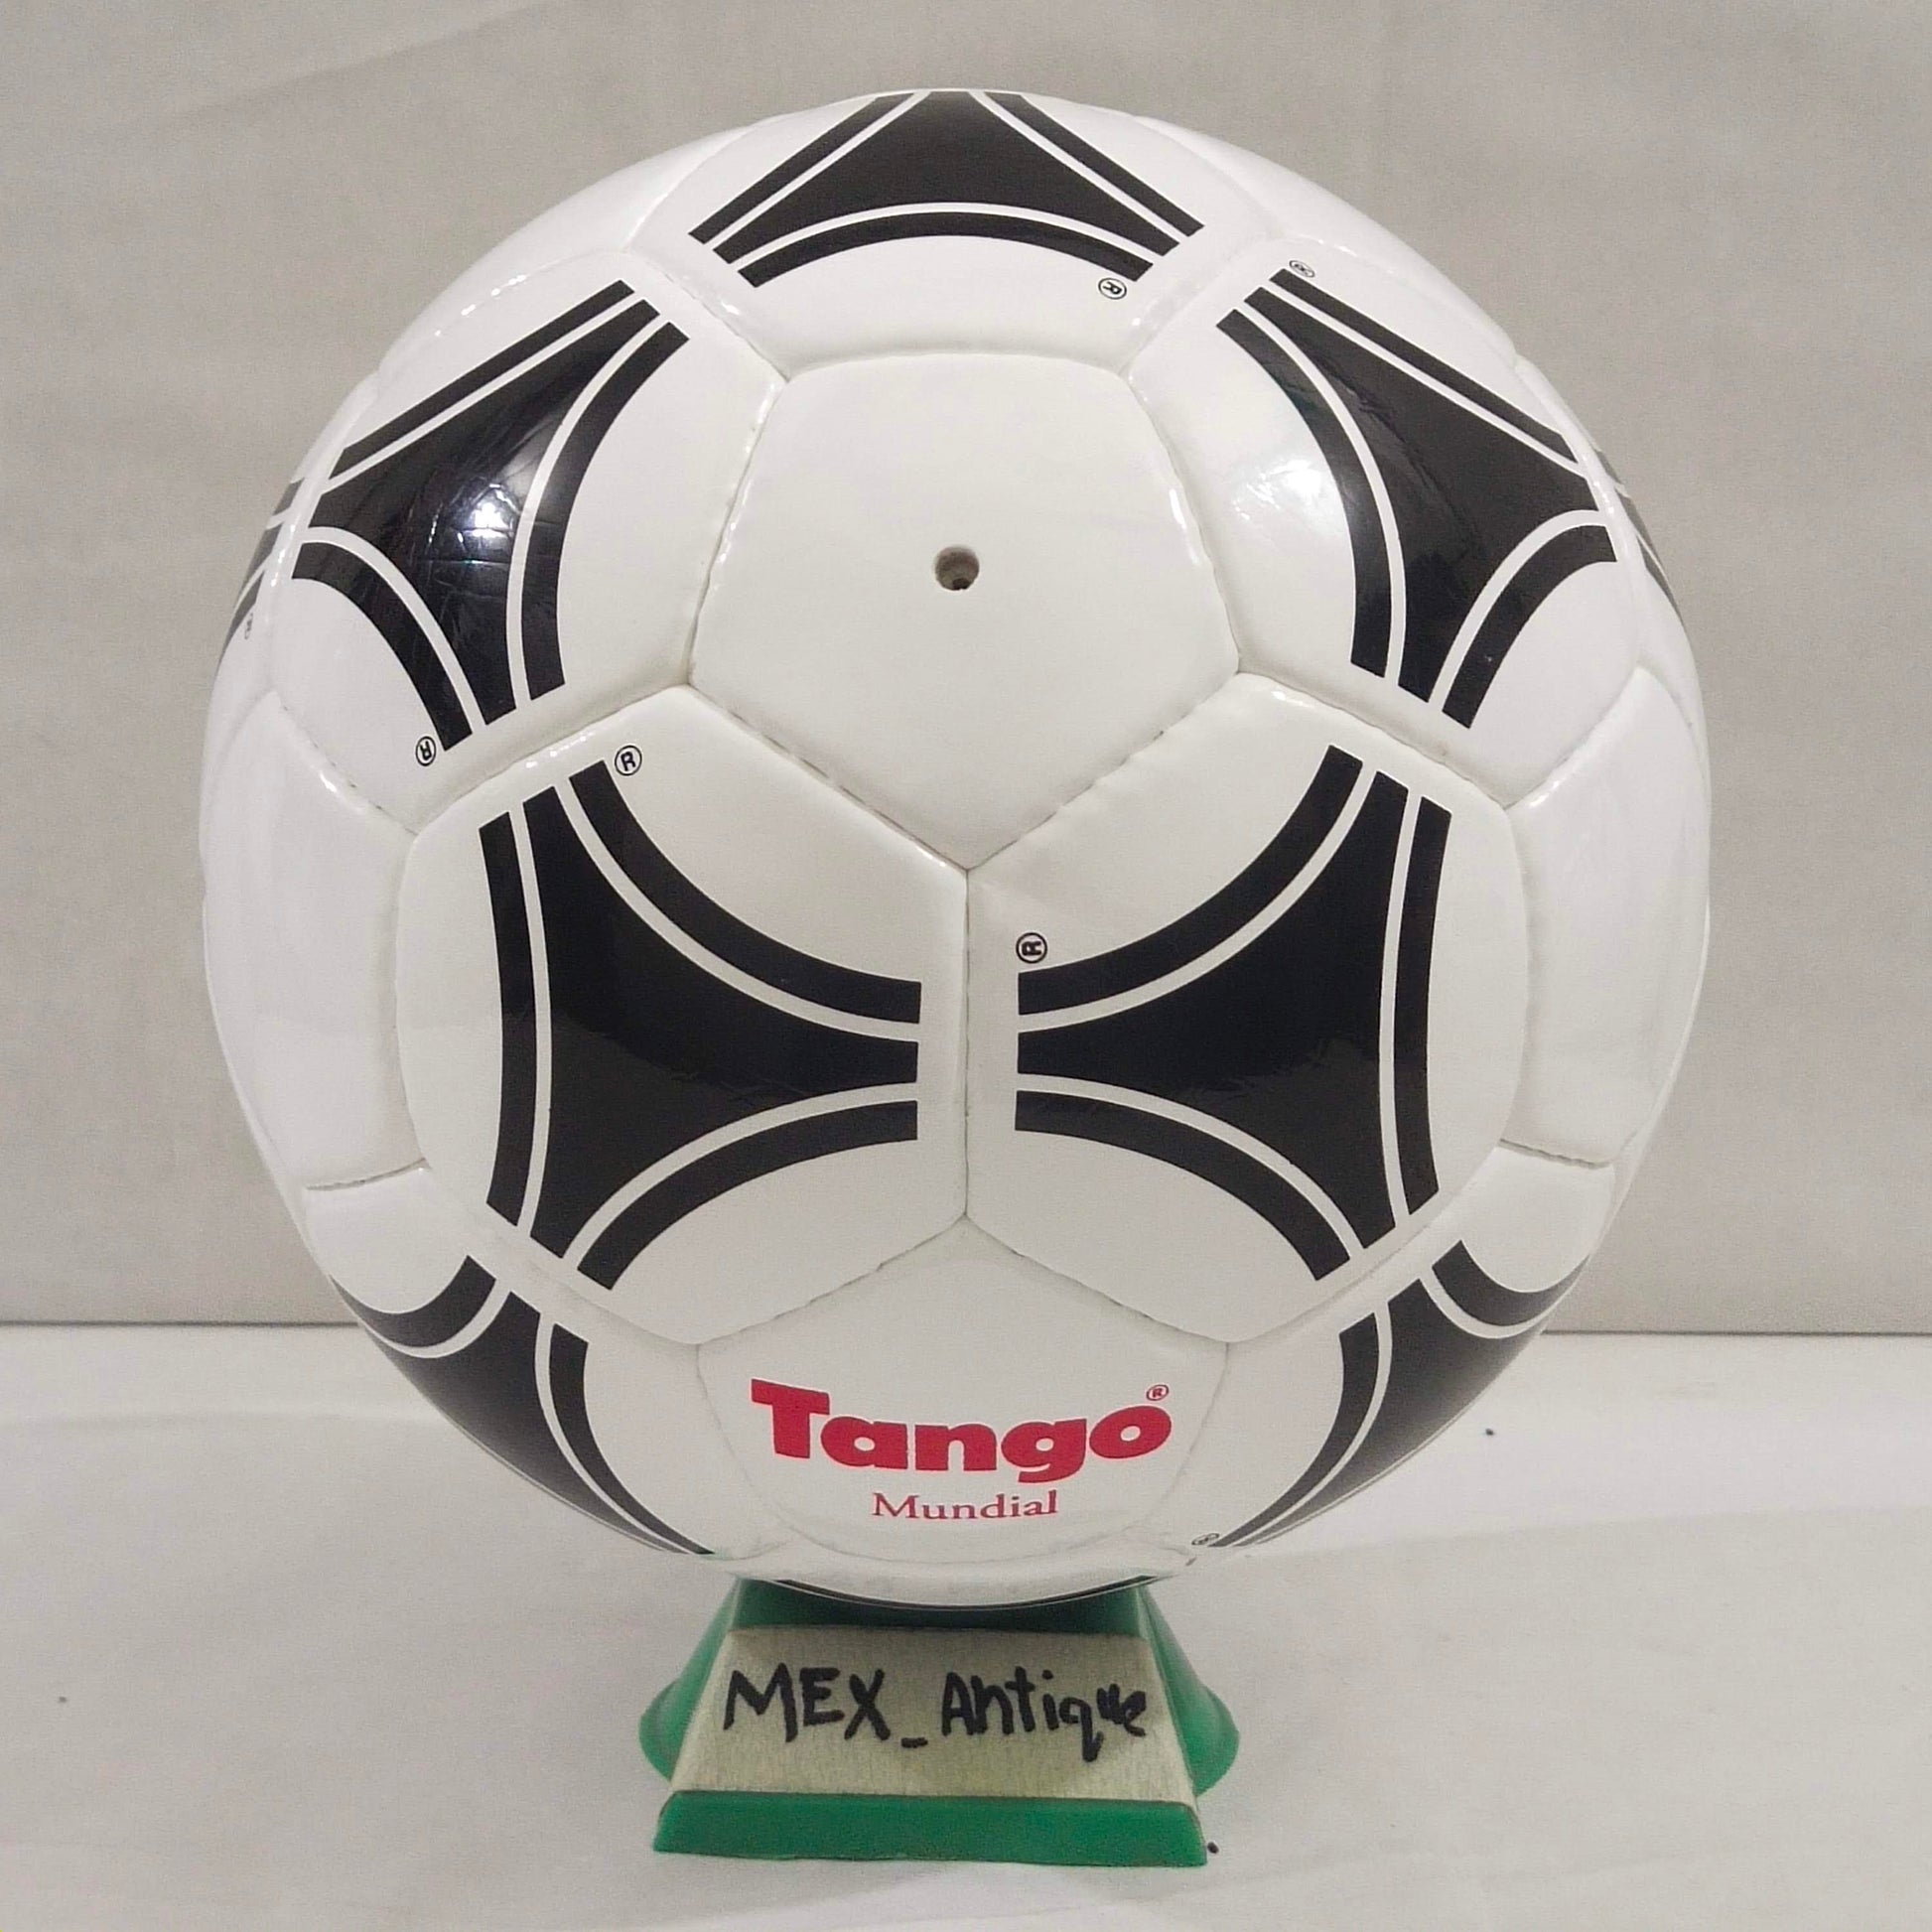 Adidas Tango Mundial | 1984 | UEFA Europa League | Official Match Ball | Size 5 03